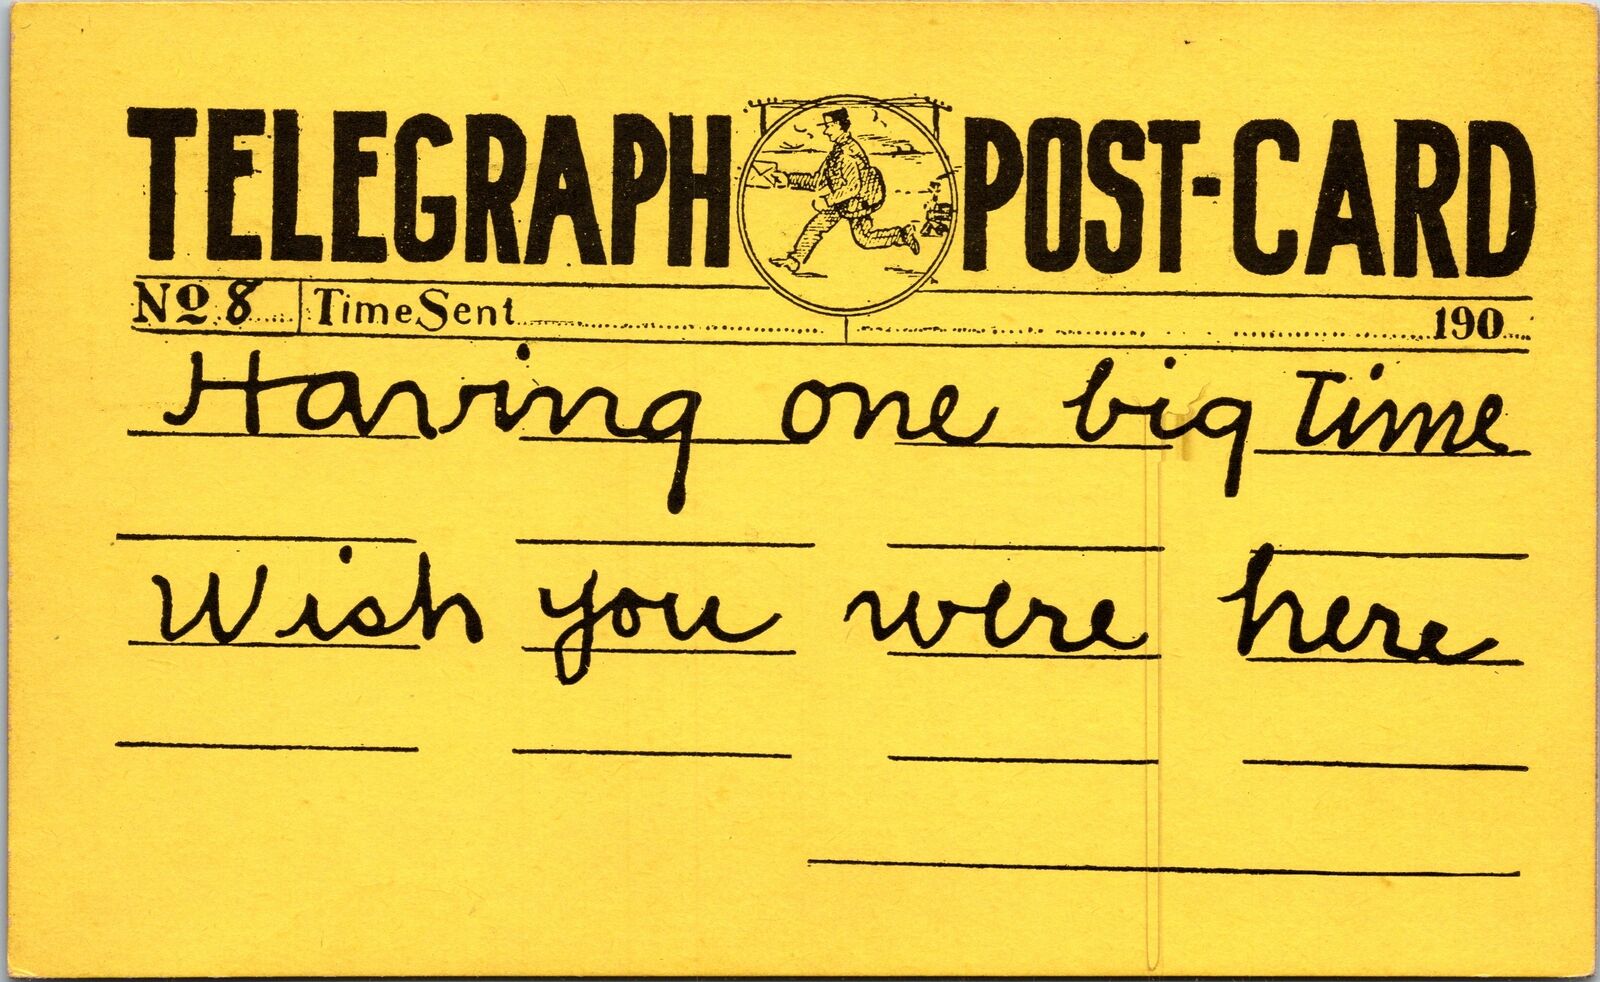 VINTAGE POSTCARD TELEGRAPH POSTCARD NOVELTY WISH YOU WERE HERE c. 1898-1902